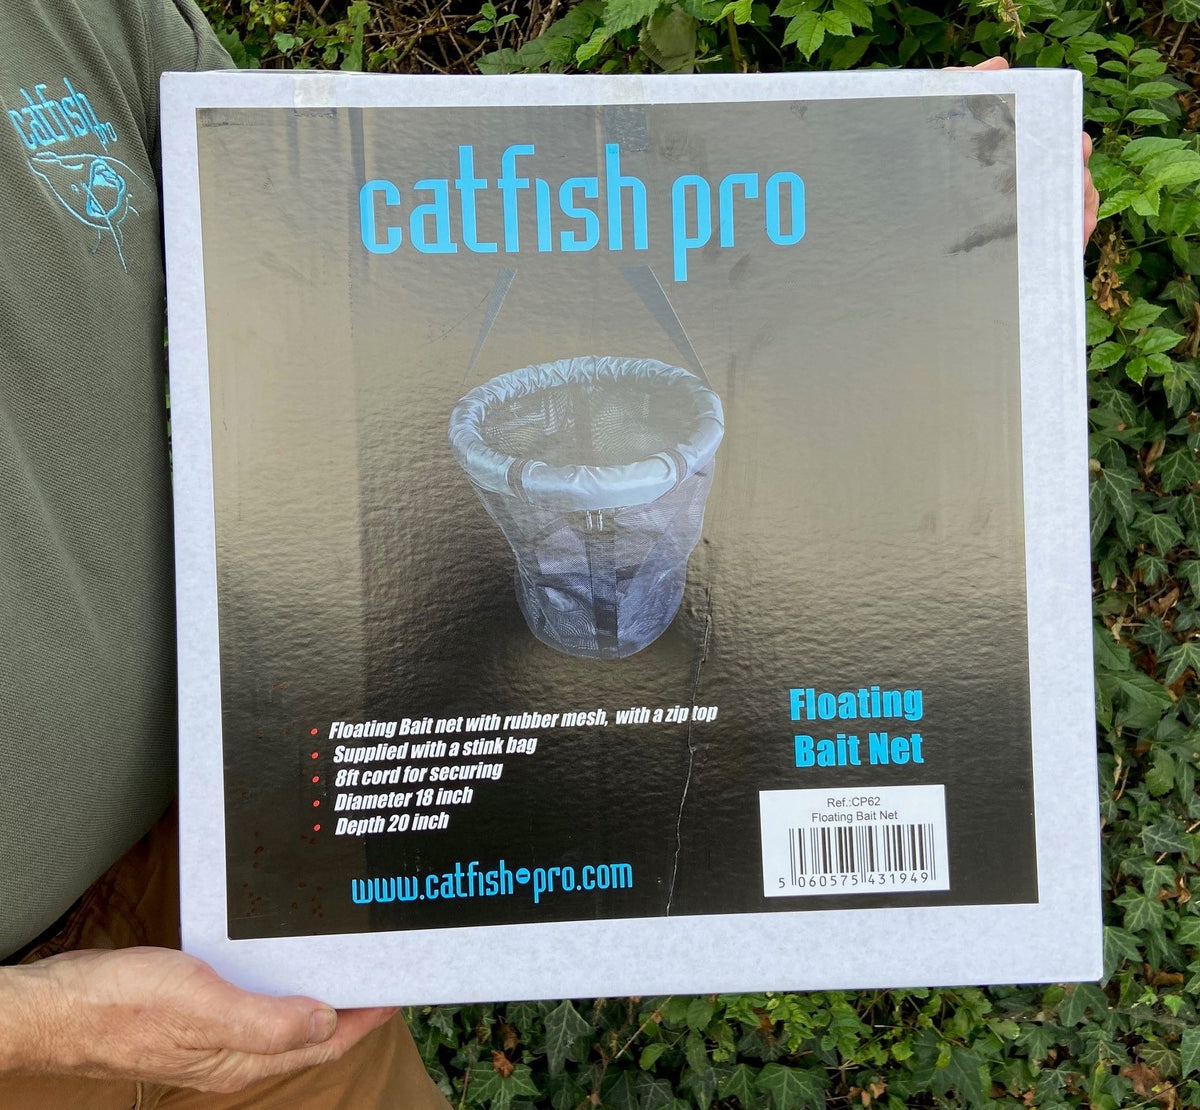 NEW! Floating Livebait Net – Catfish-Pro Ltd